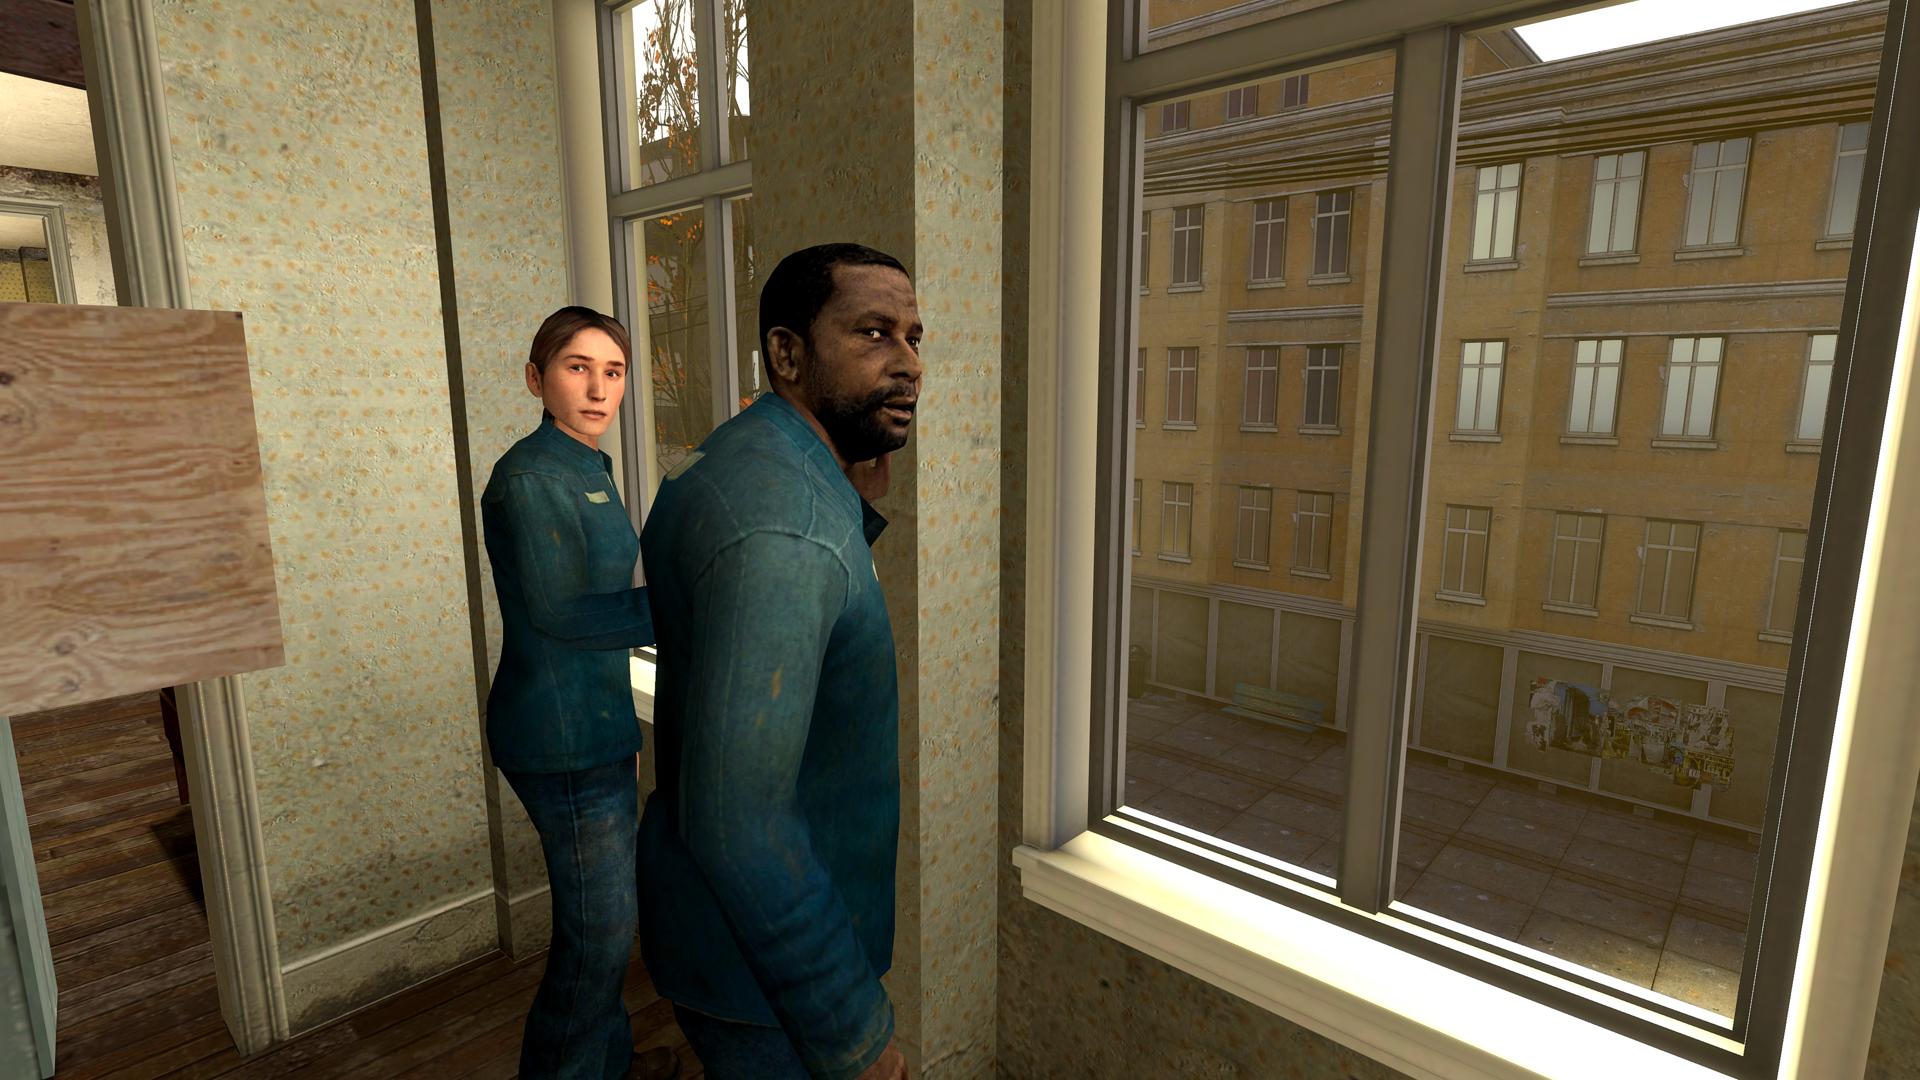 Screenshot №5 from game Half-Life 2: Update